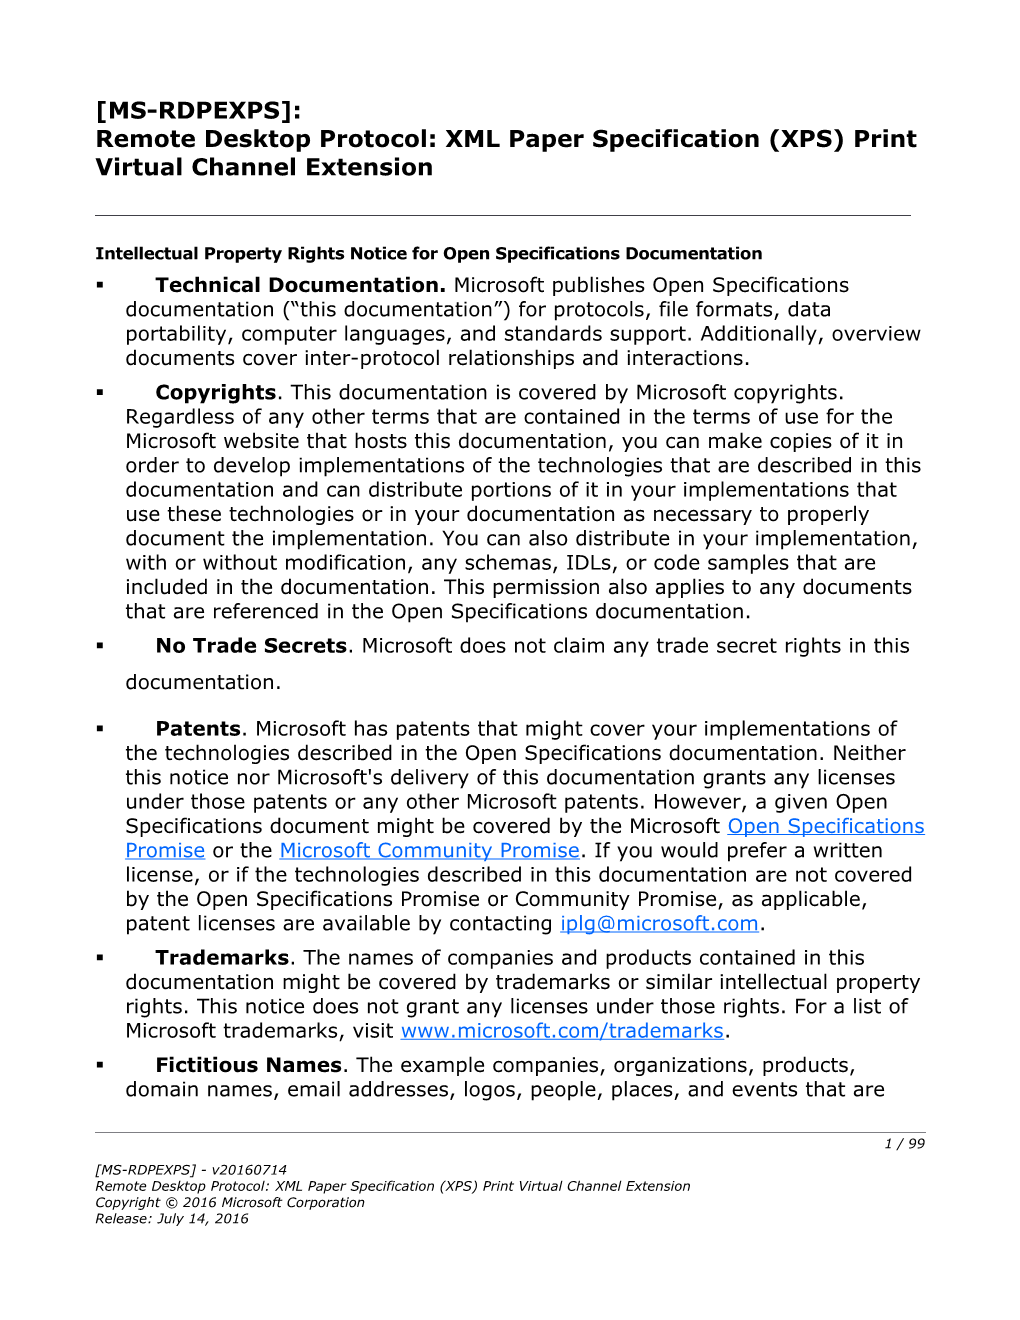 Remote Desktop Protocol: XML Paper Specification (XPS) Print Virtual Channel Extension